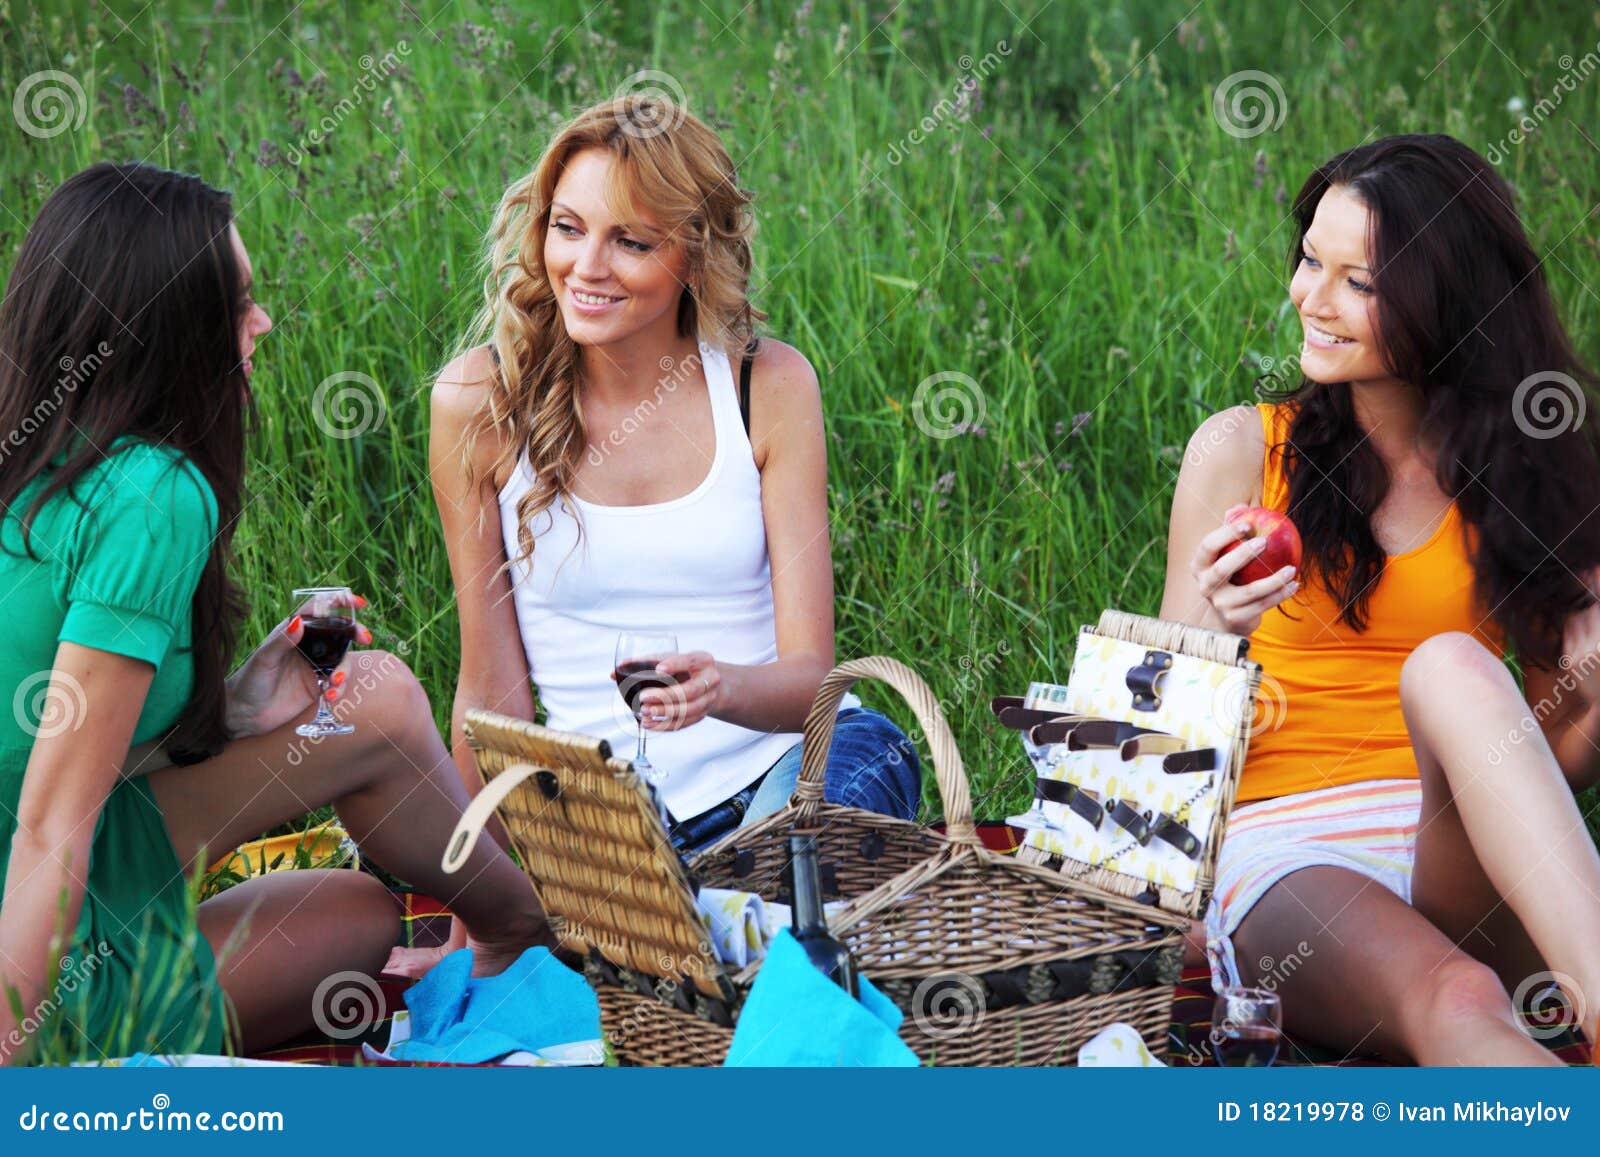 girlfriends on picnic